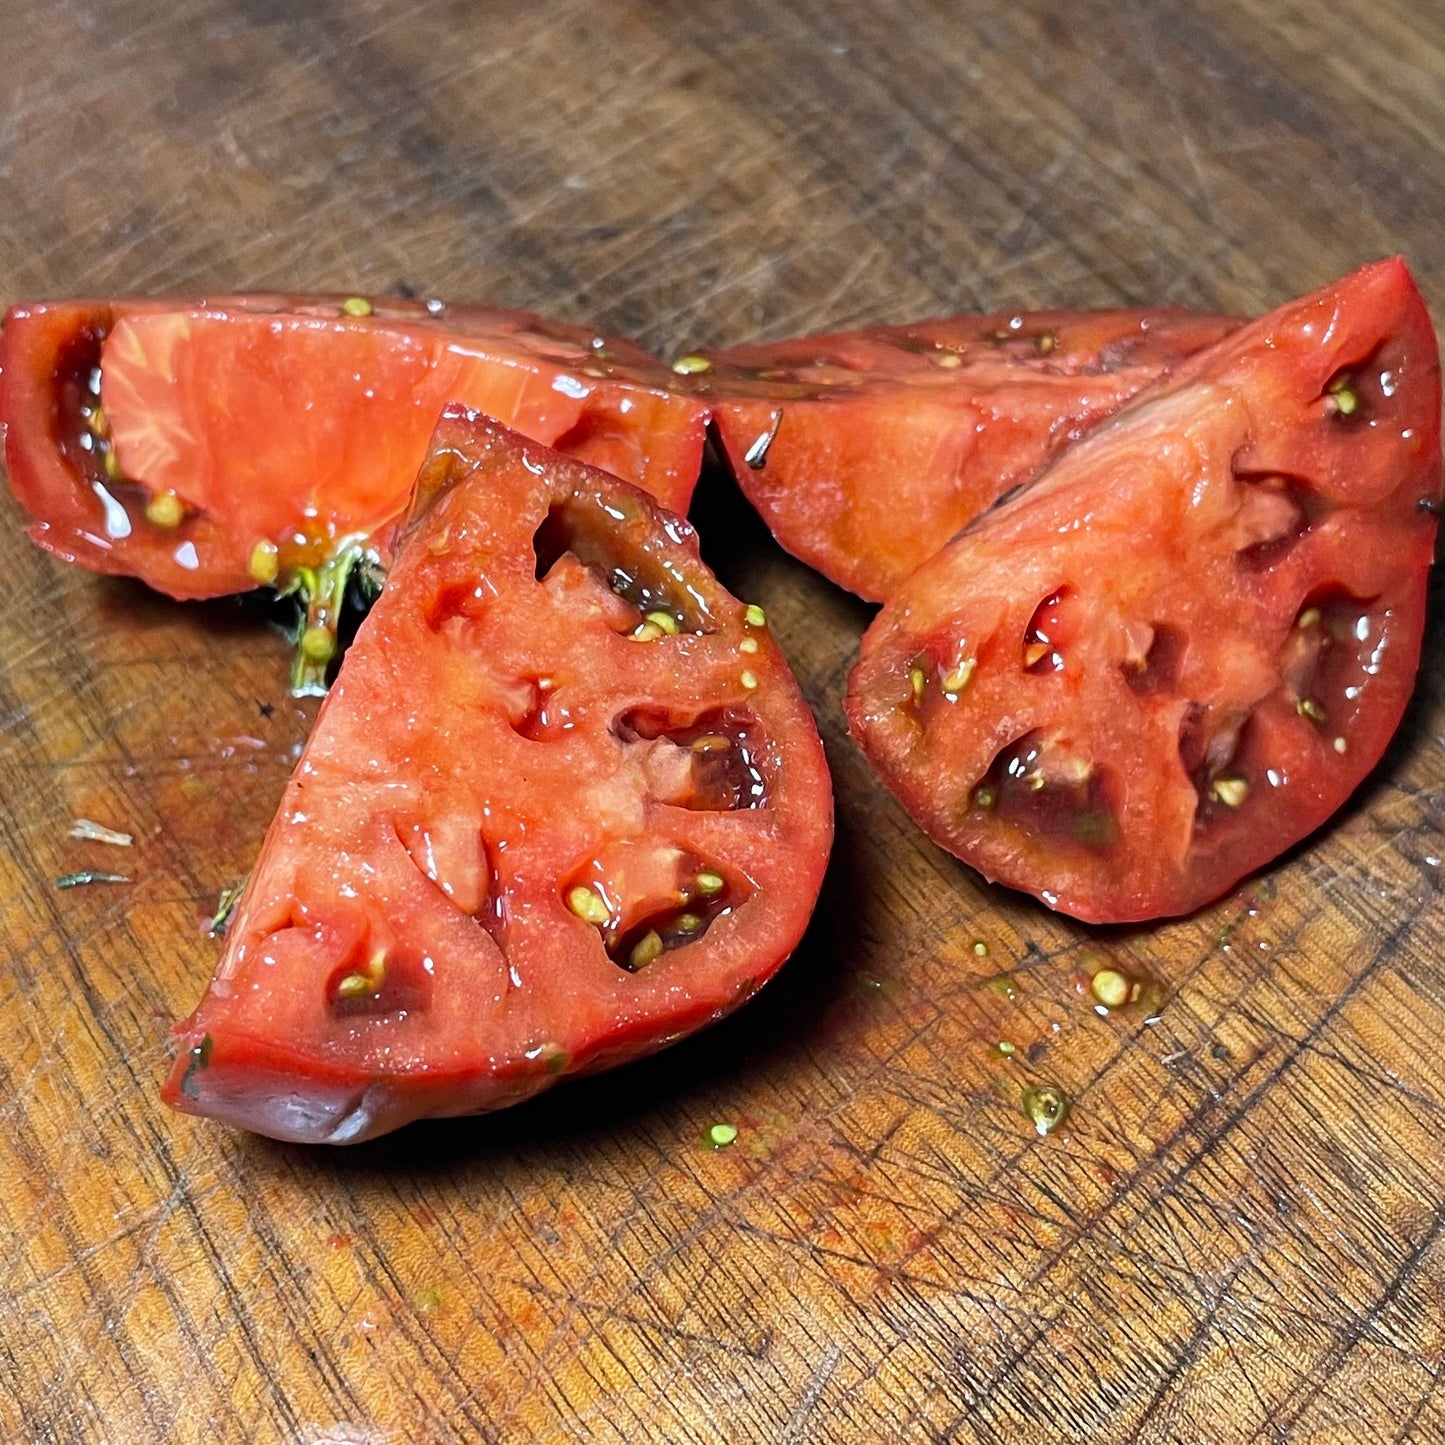 Chocolate Stripes - Tomato Seeds - Heirloom Tomato - 25+ Seeds